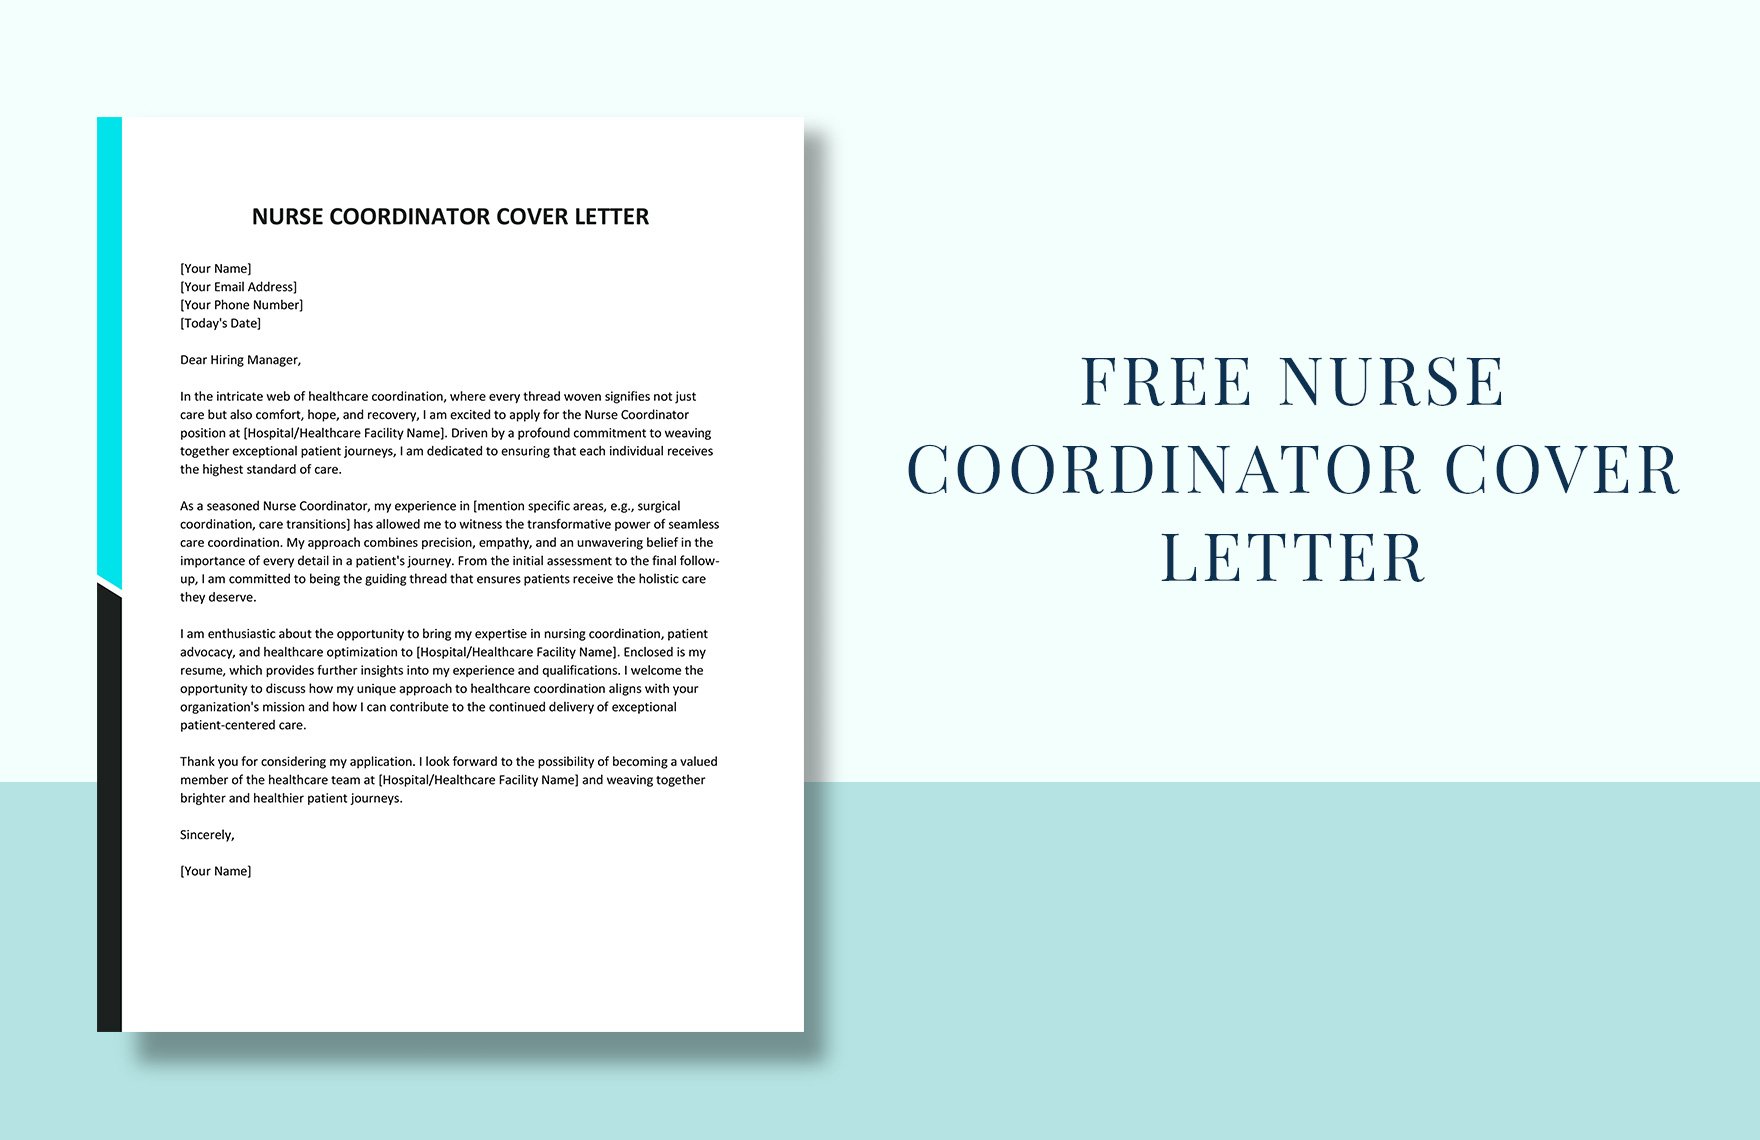 Nurse Coordinator Cover Letter in Word, Google Docs